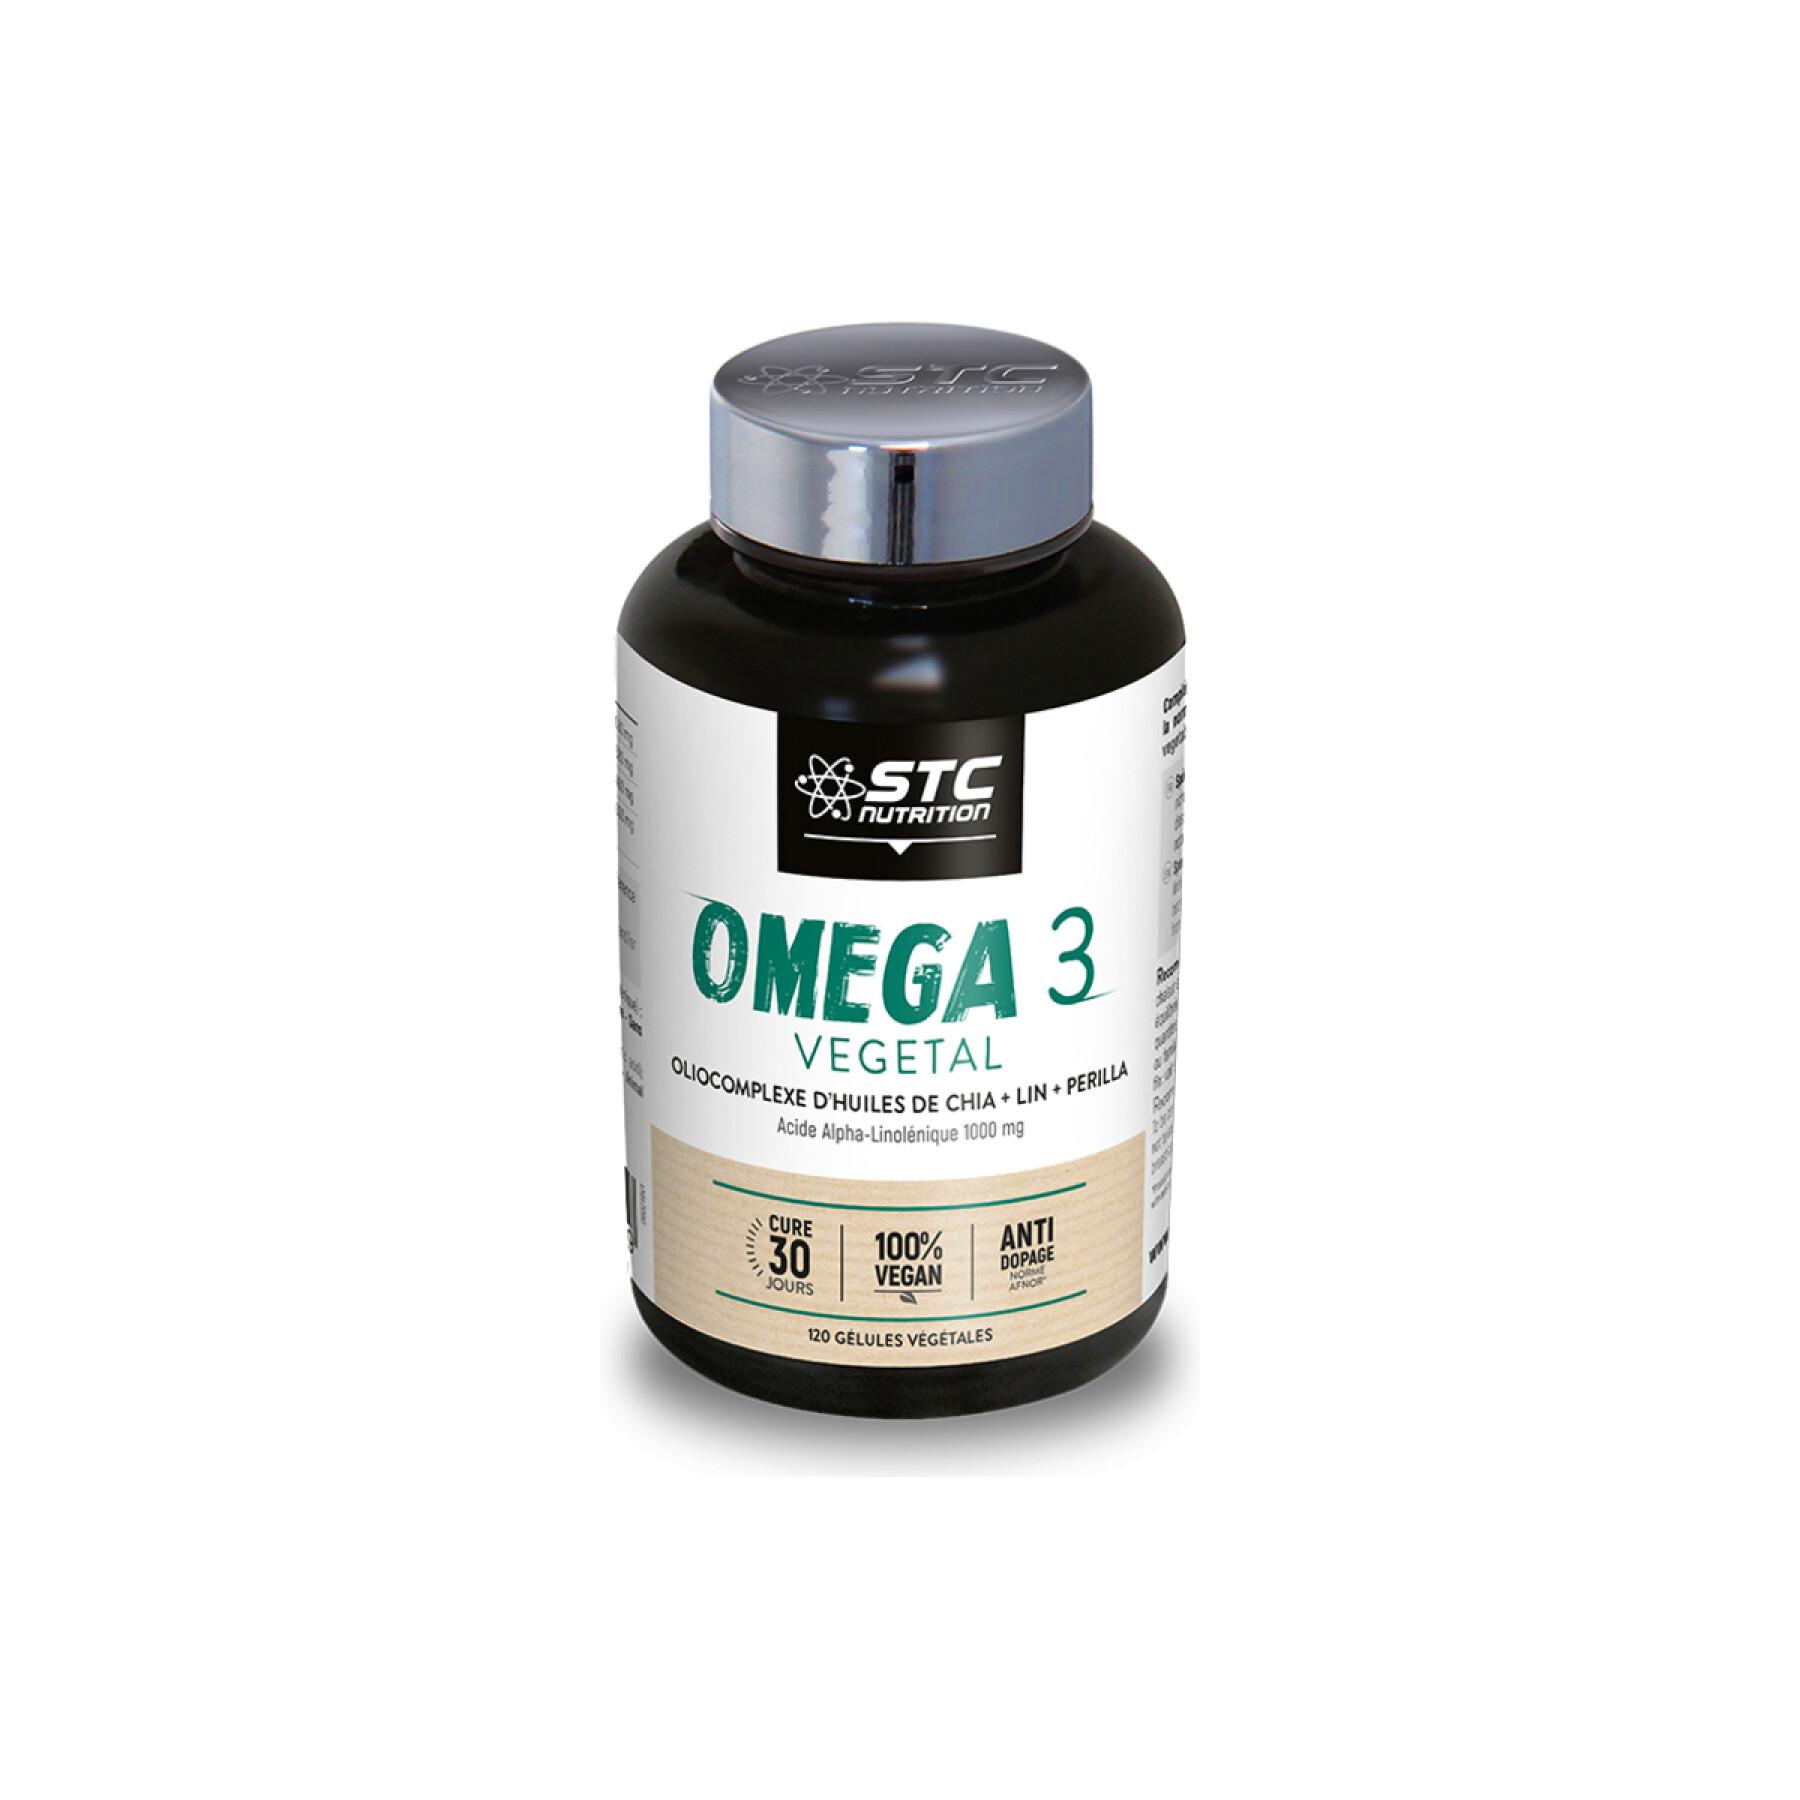 Oliocomplexe d'huiles de chia + lin + perilla omega 3 vegetal STC Nutrition - 120 capsules